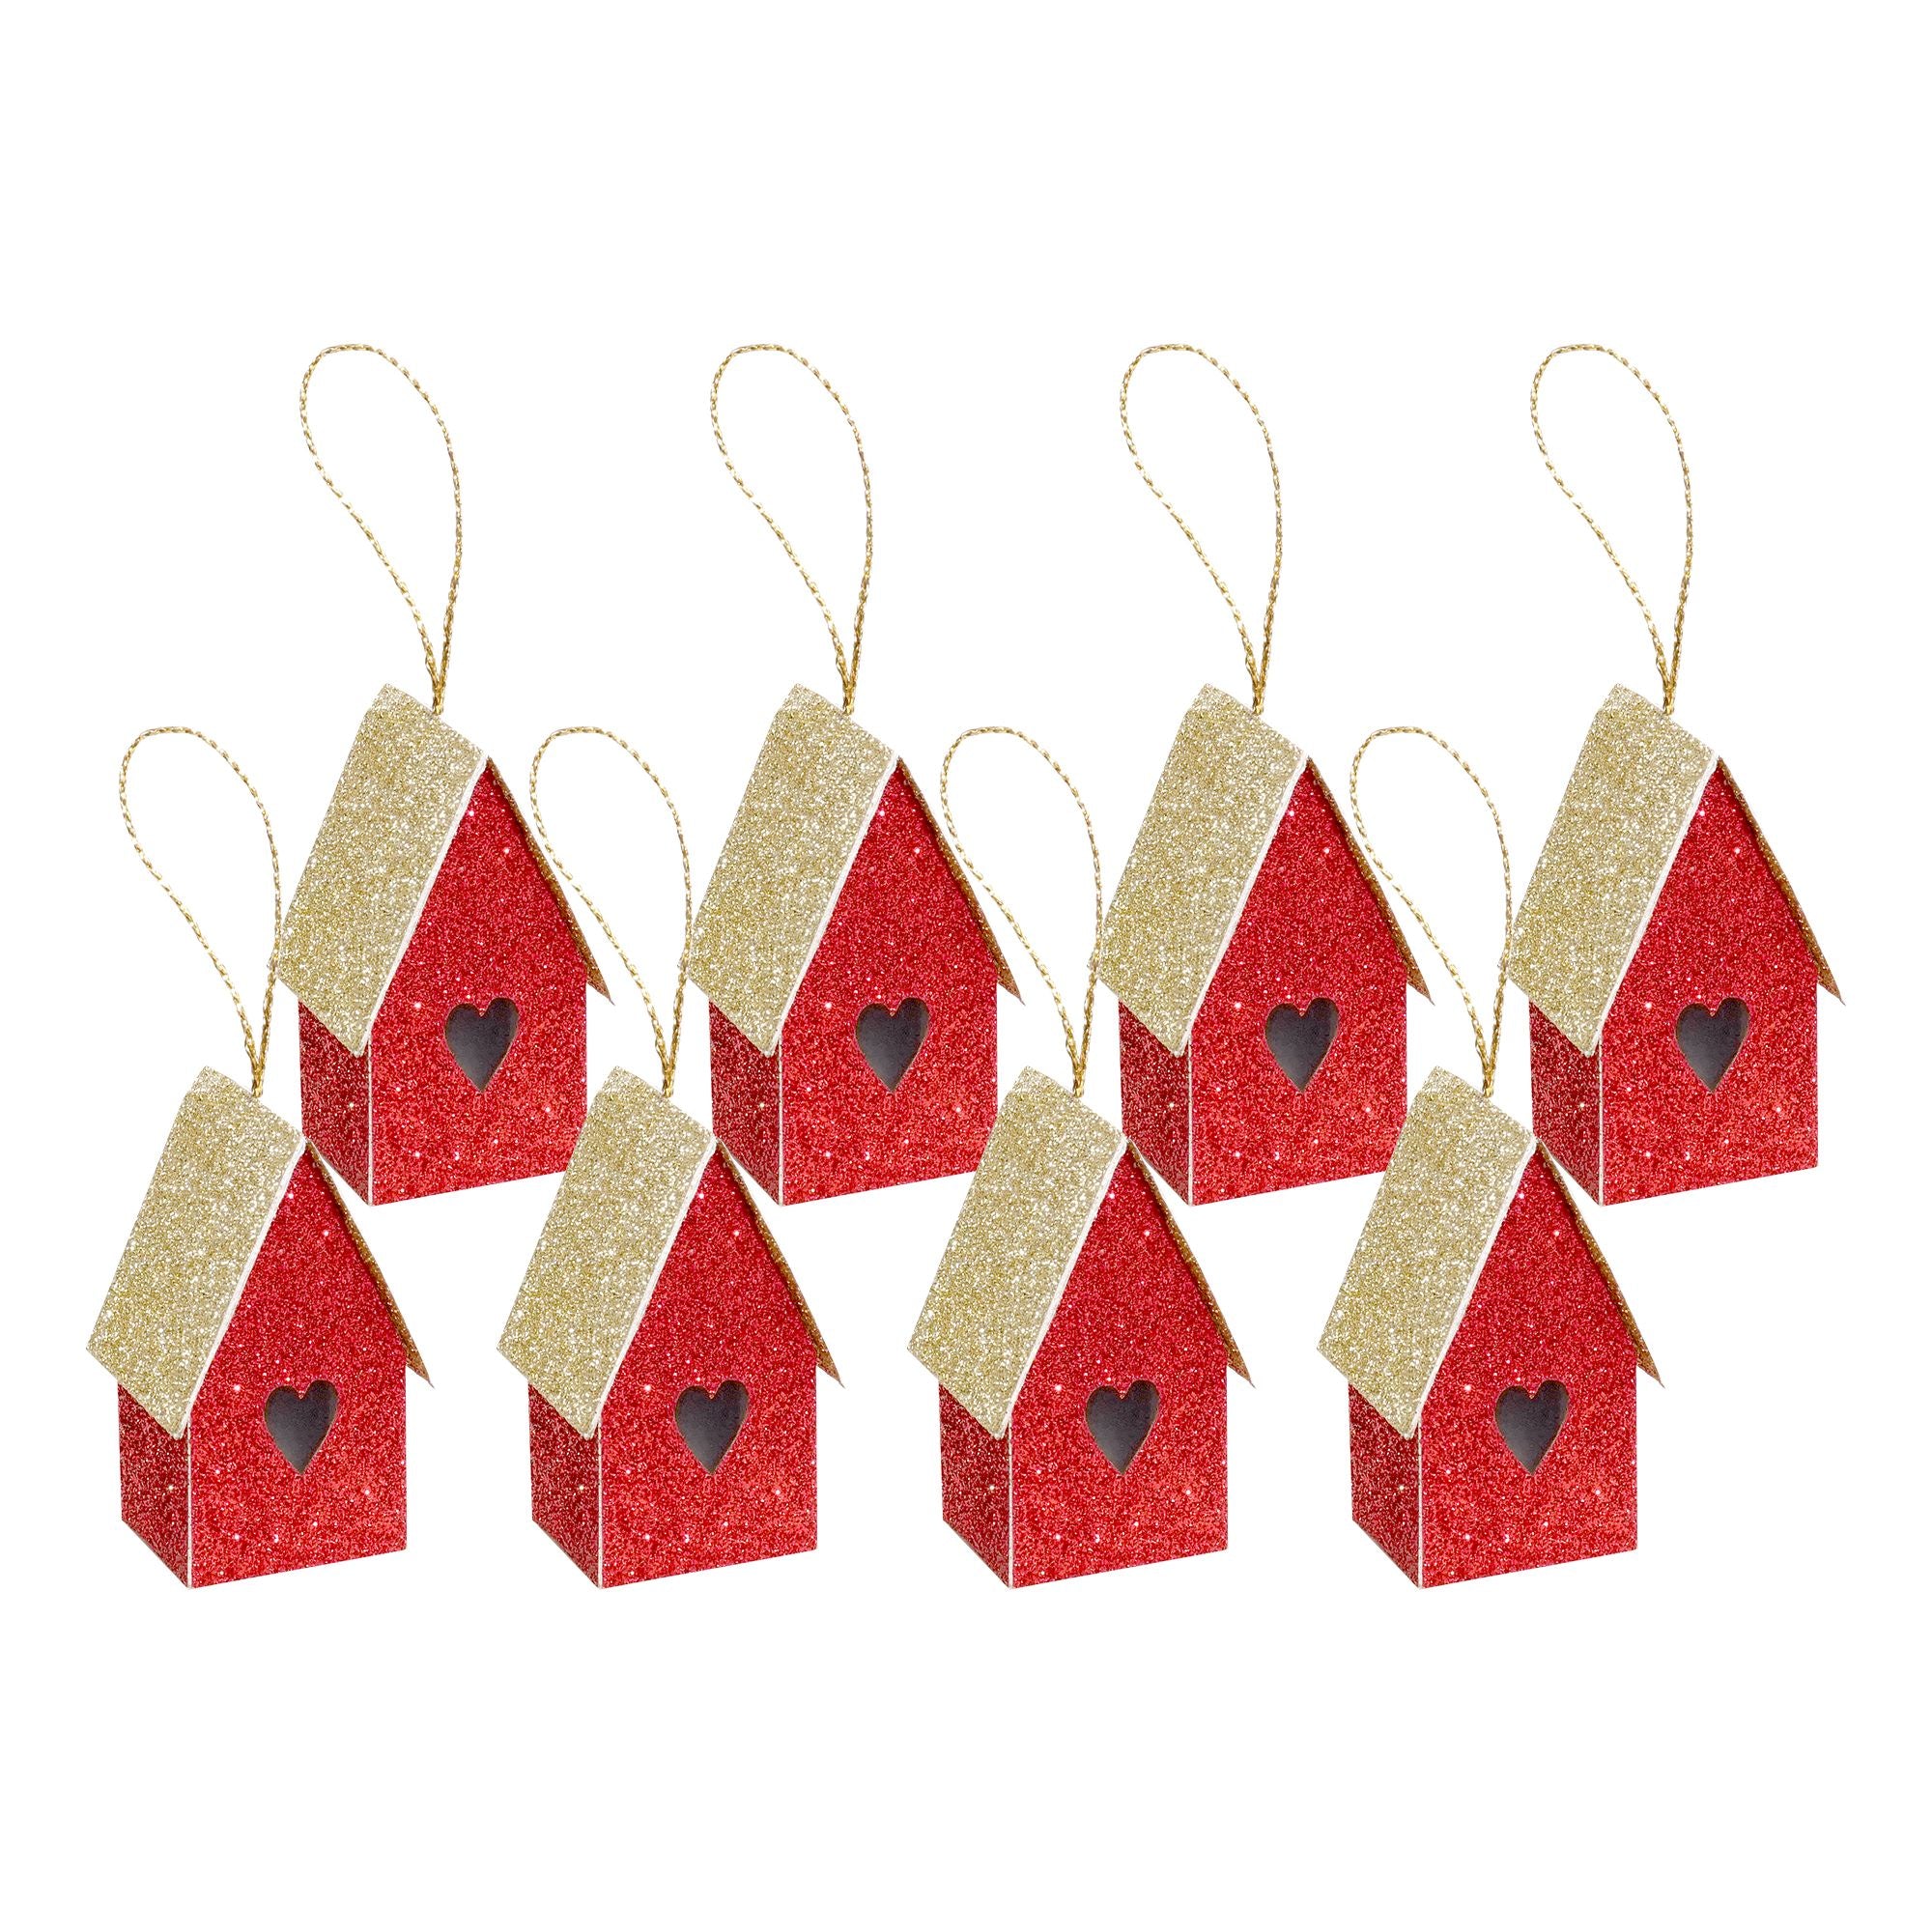 Handmade Christmas Ornaments - Glitter Bird house  H 1.5 X W1.5 X L 1inch, Red, 8pc